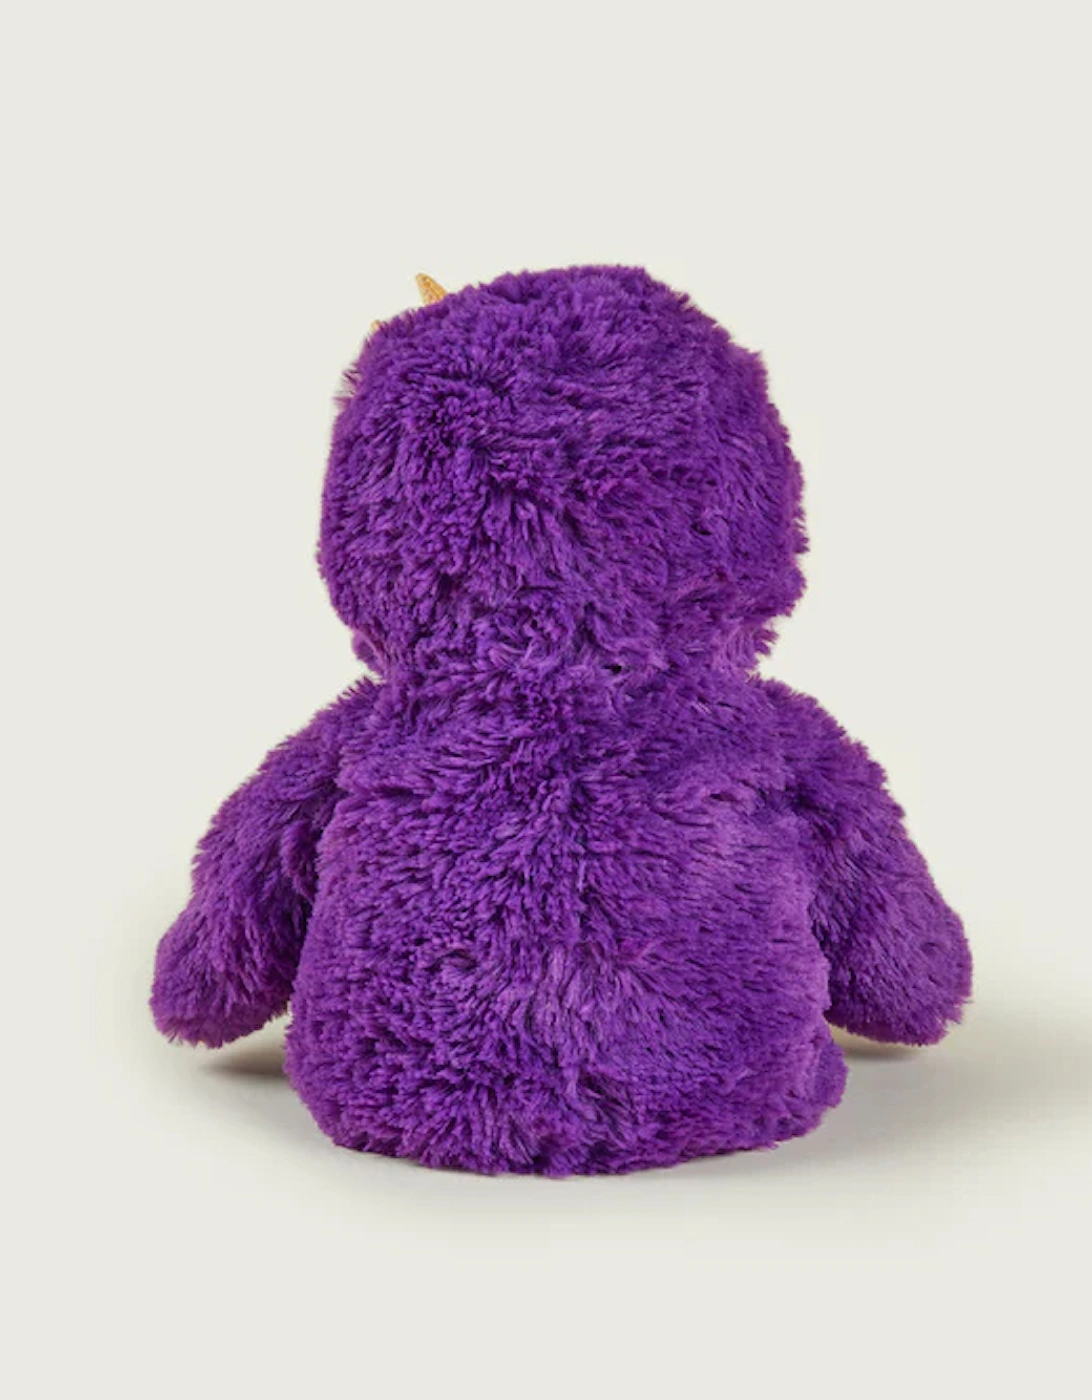 9" Junior Purple Monster Microwavable